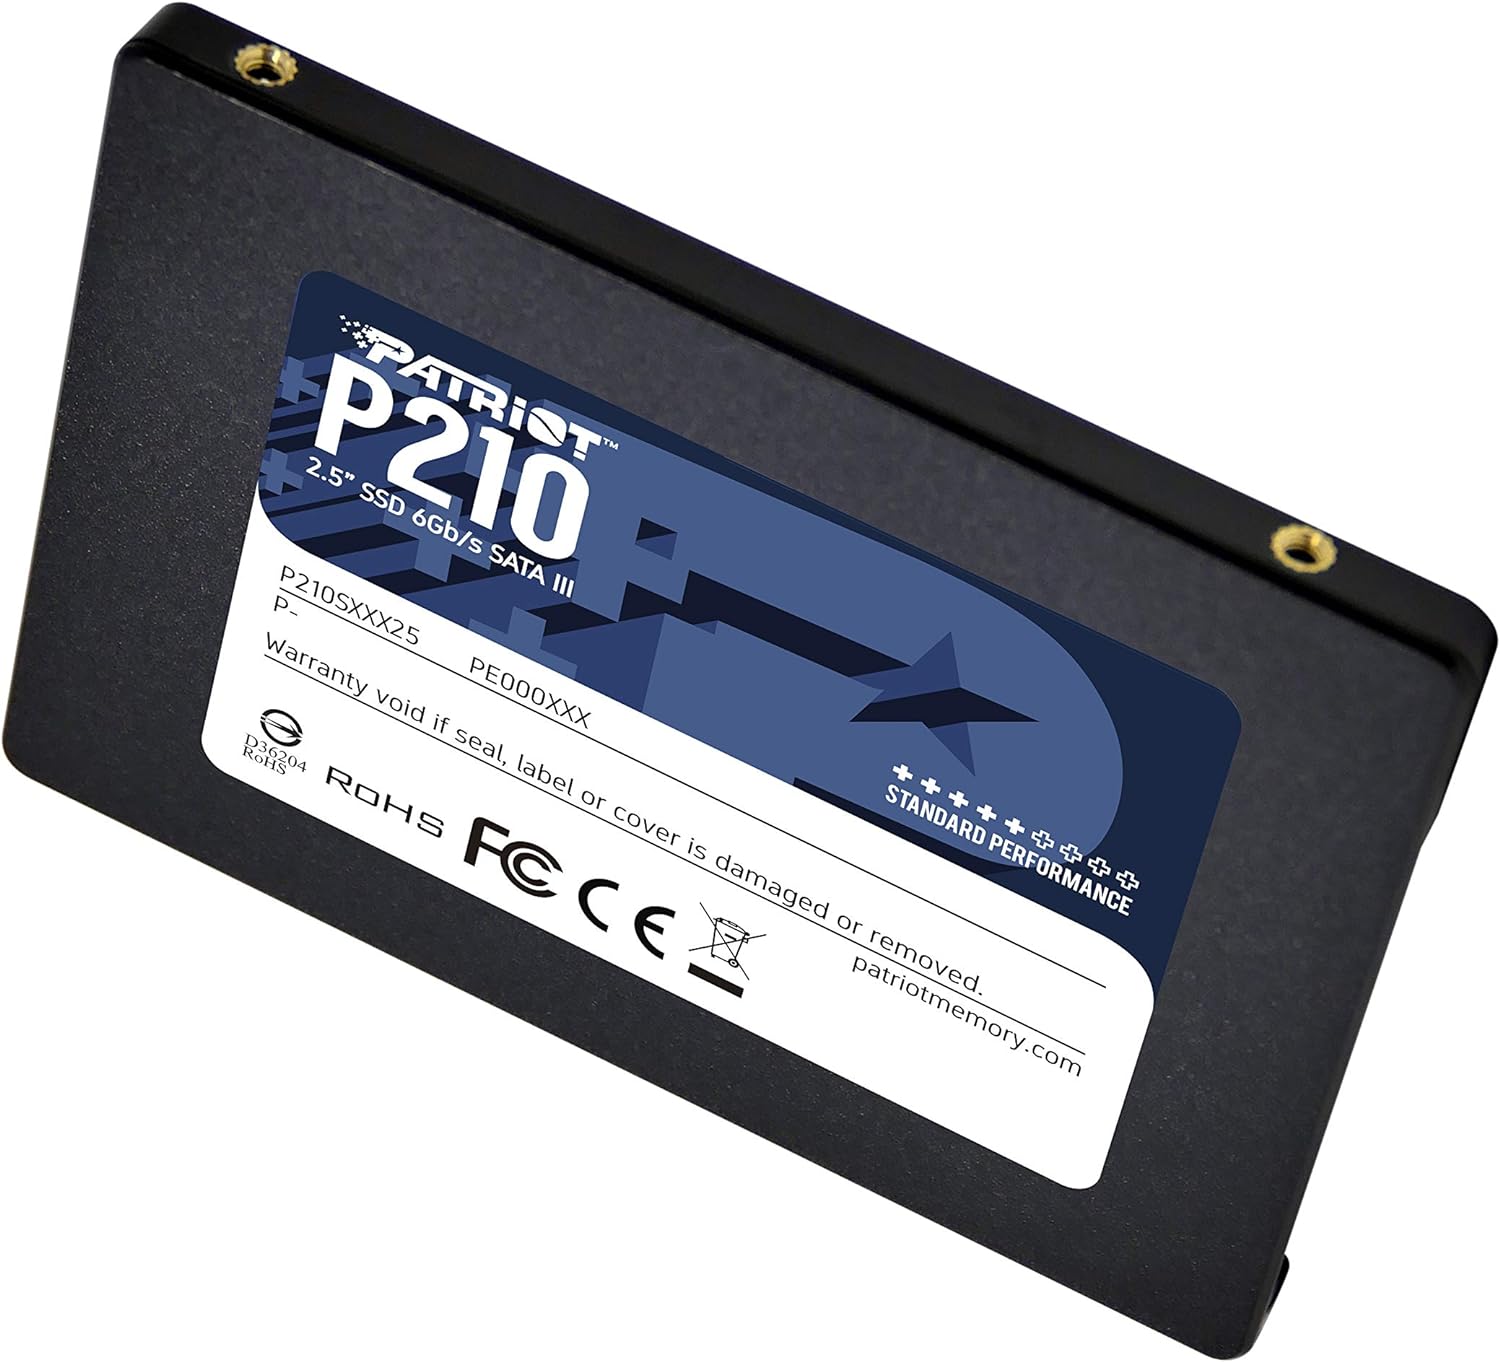 SSD 1TB 2.5 PATRIOT P210 P210S1TB25